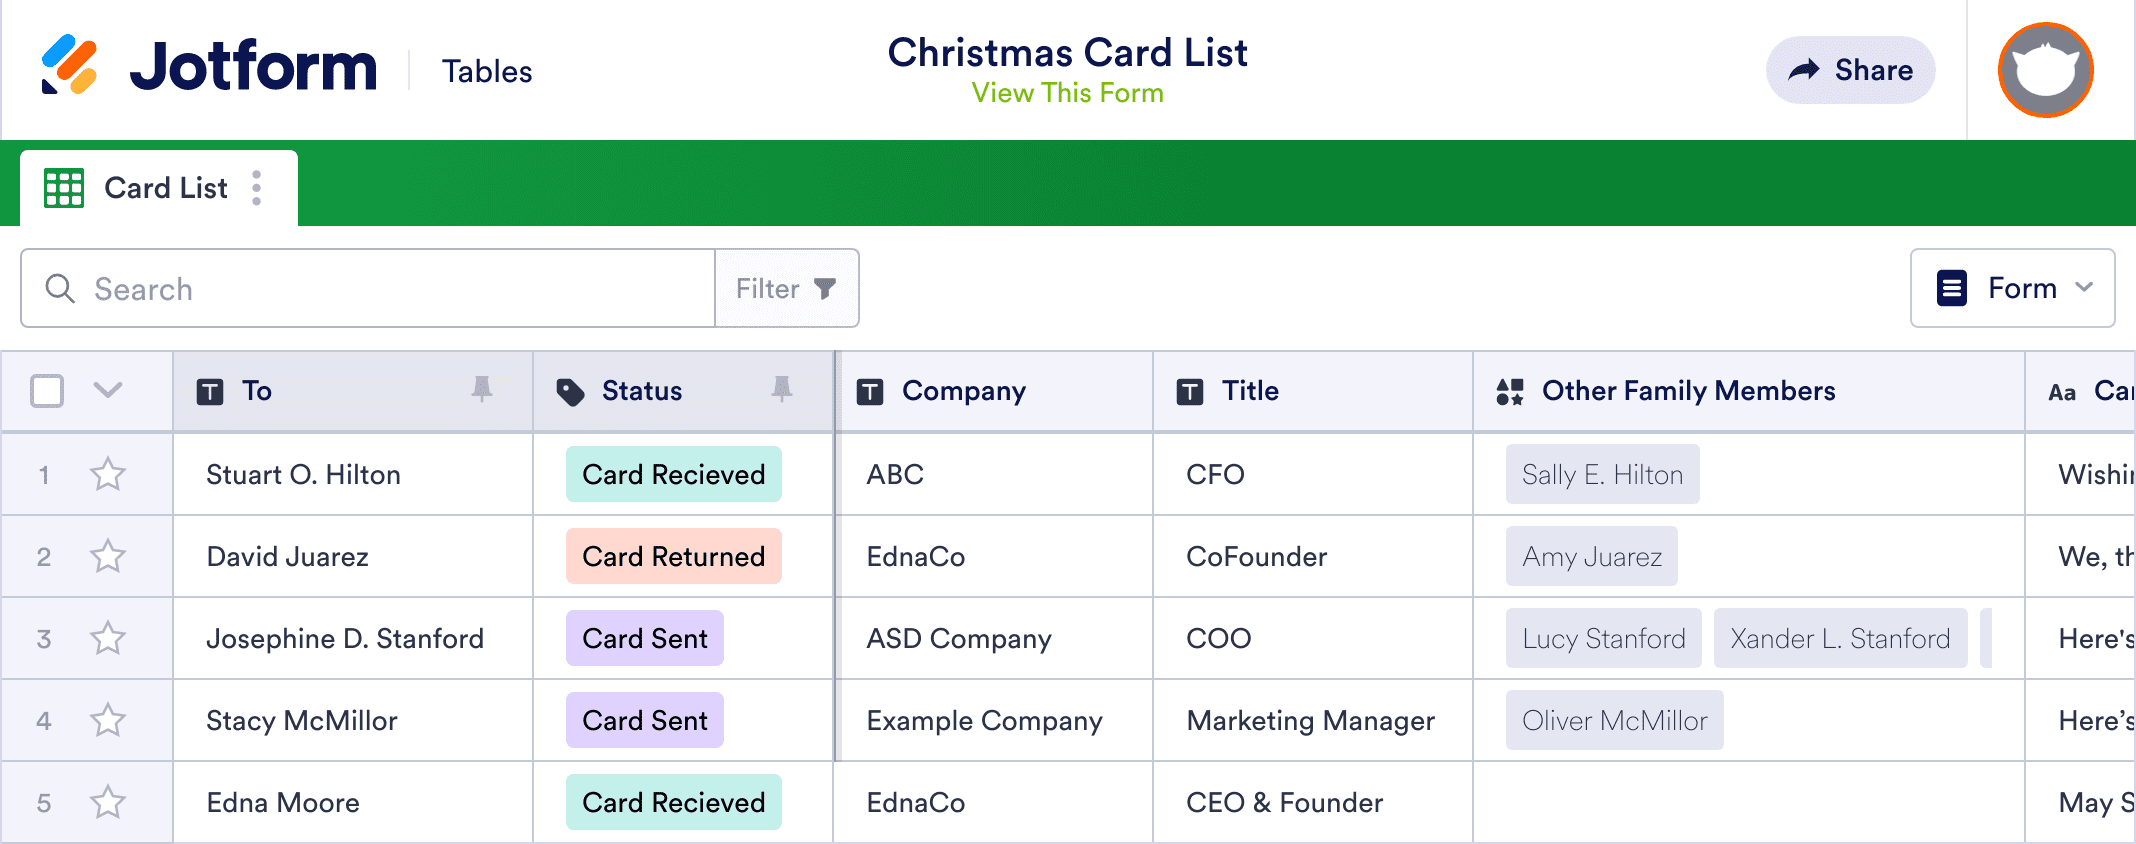 Christmas Card List Template | Jotform Tables